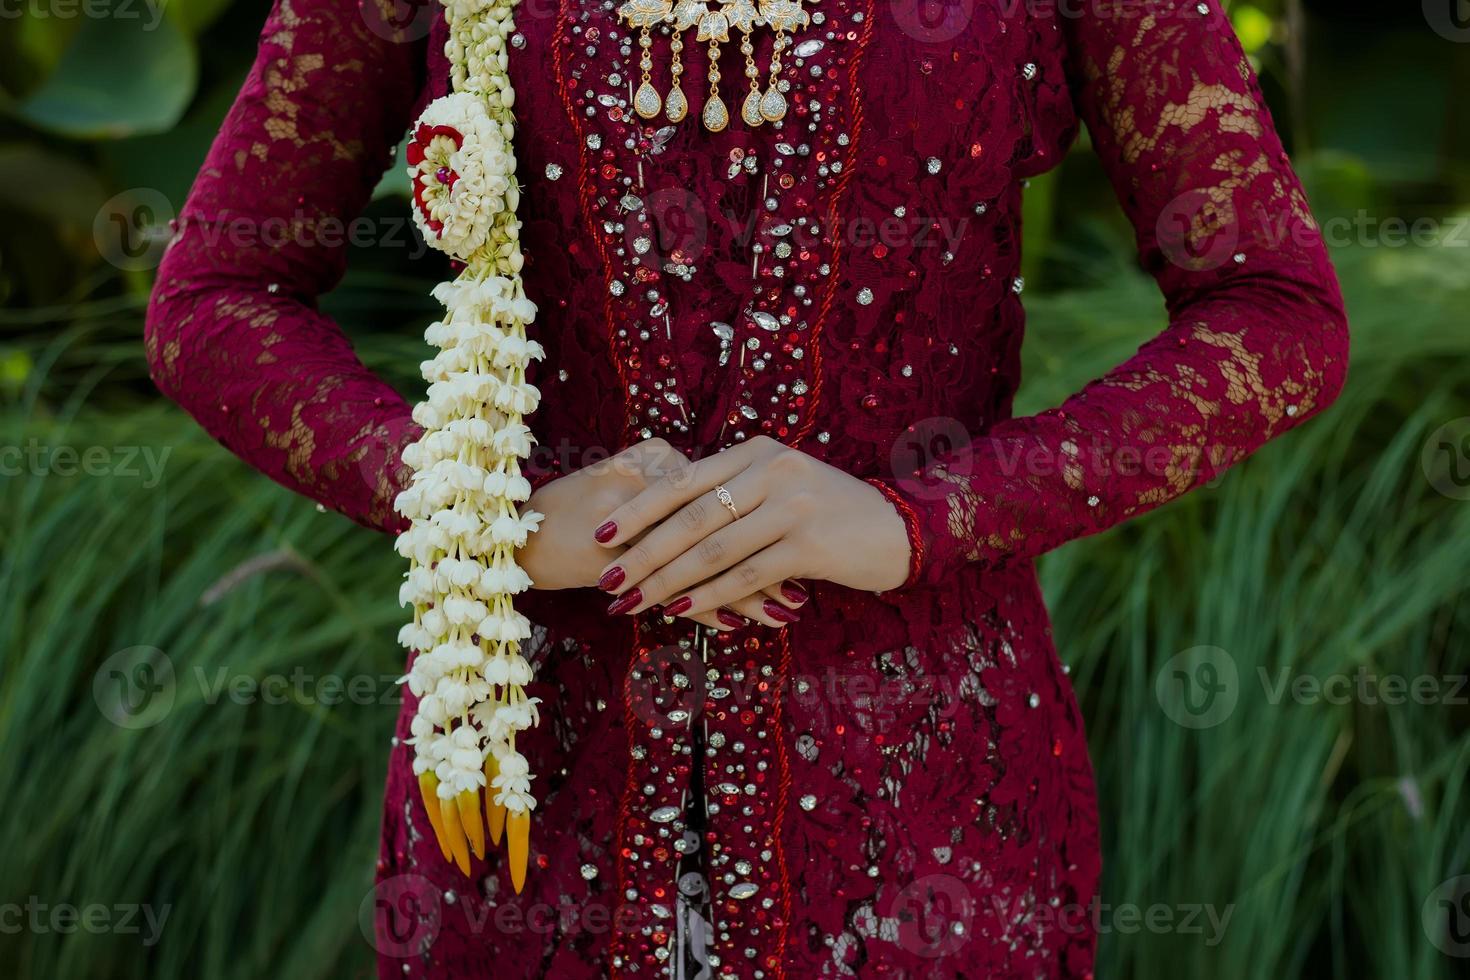 accesorios de novia indonesia. vestido de novia foto